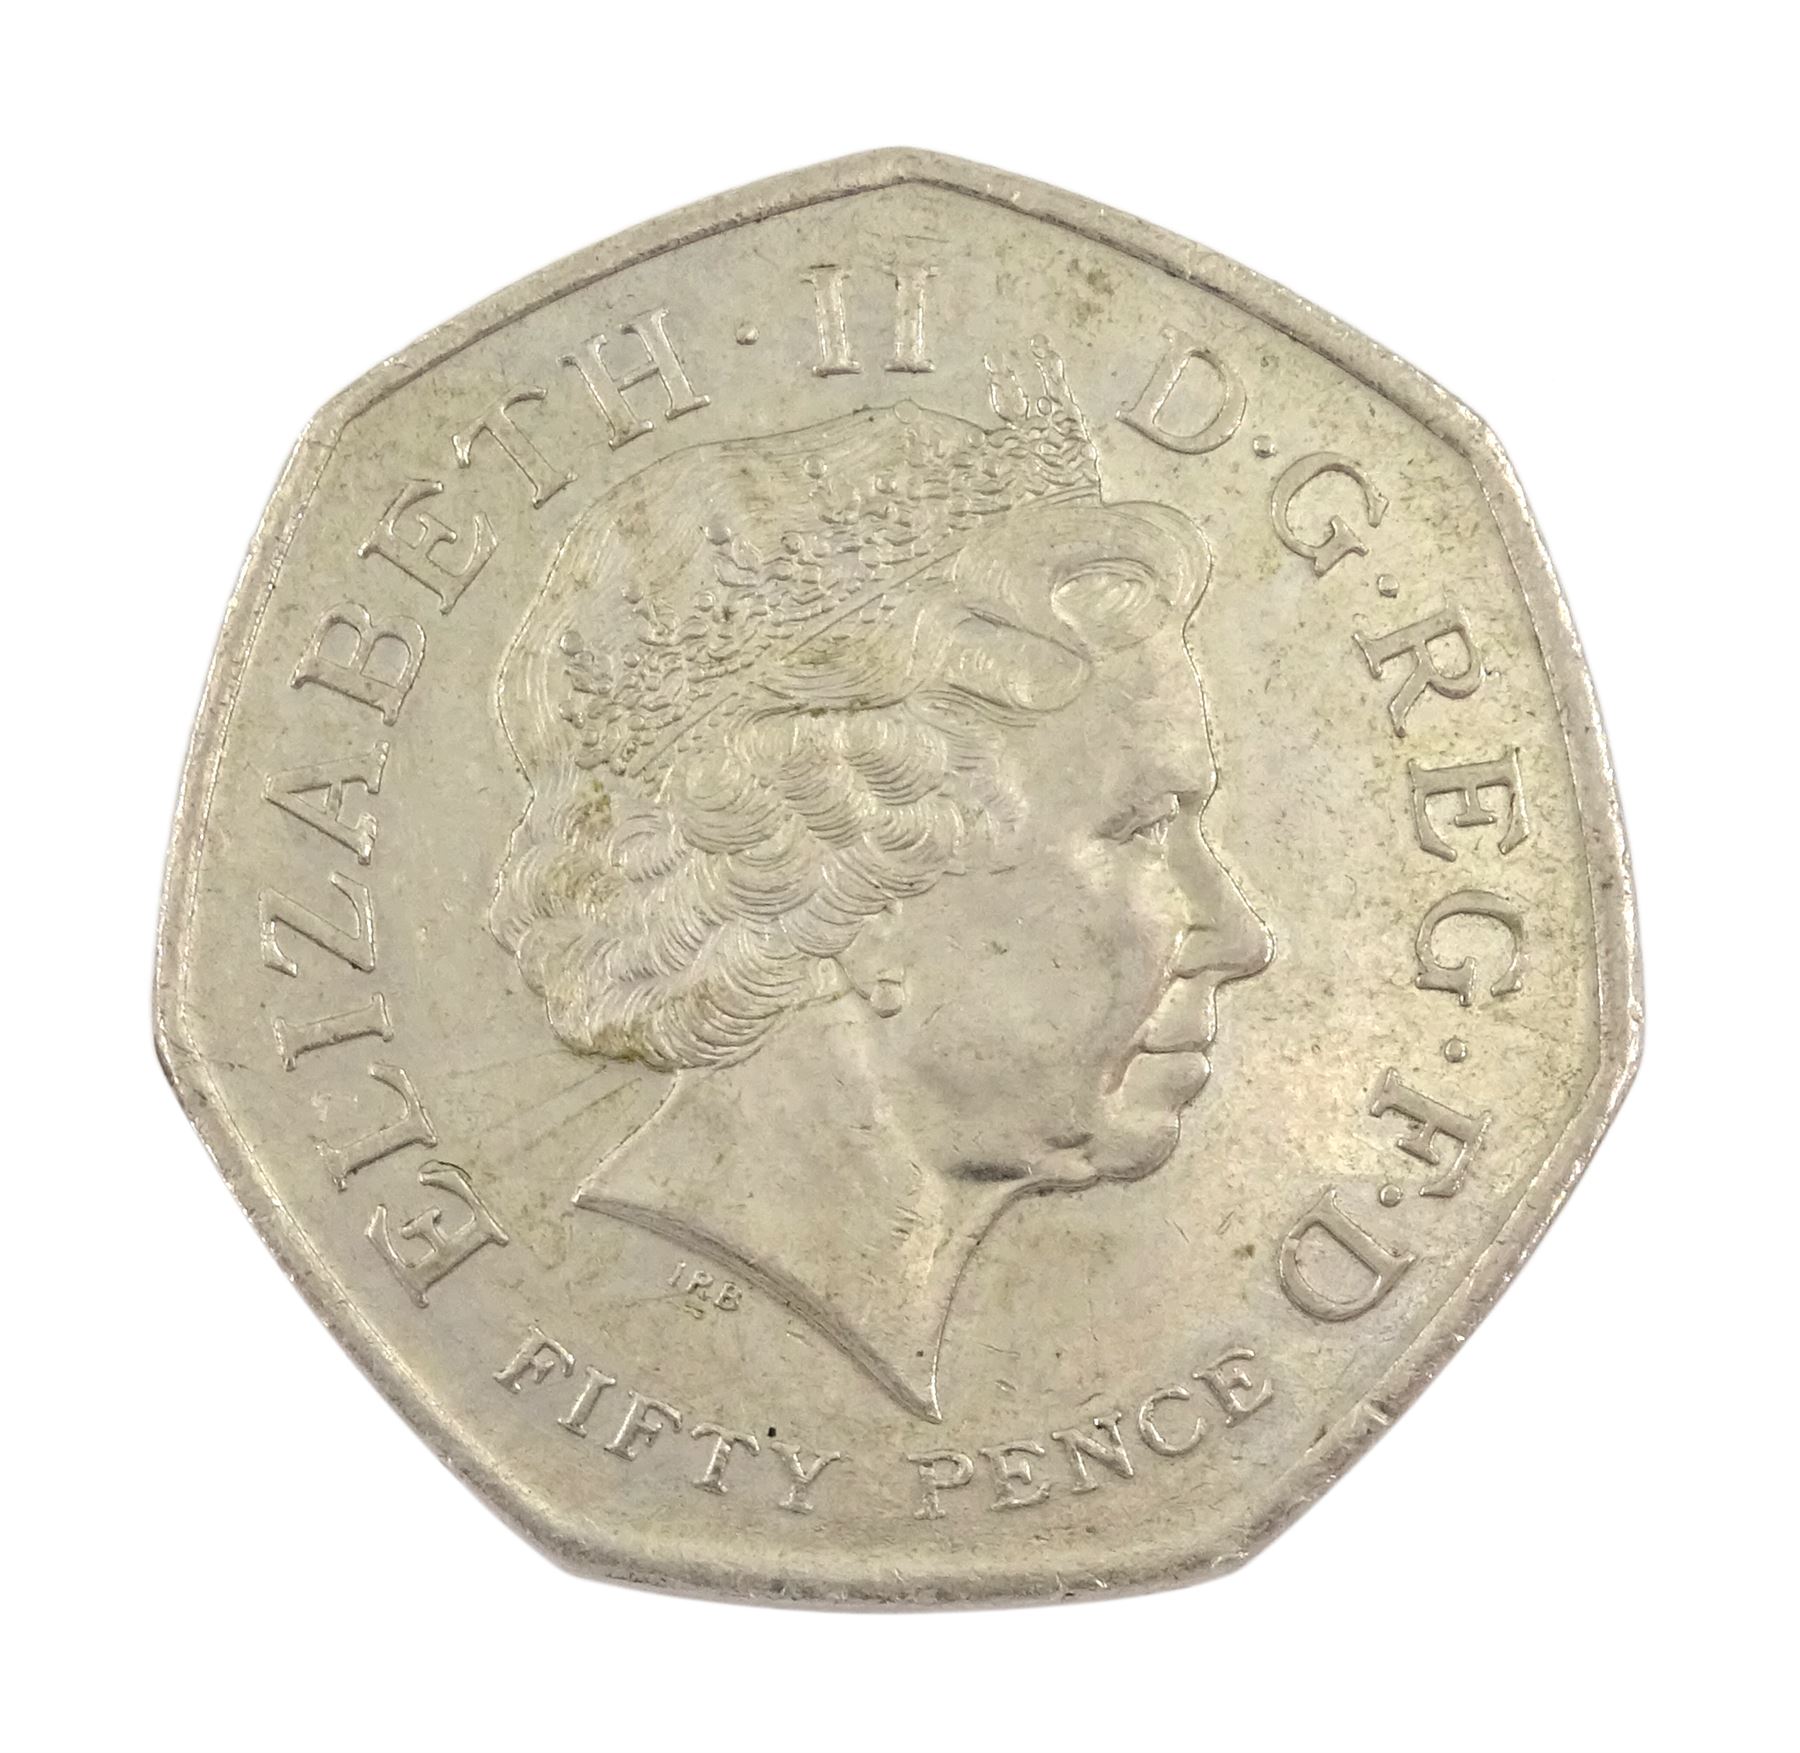 Queen Elizabeth II United Kingdom 2009 Kew Gardens fifty pence coin - Image 2 of 2